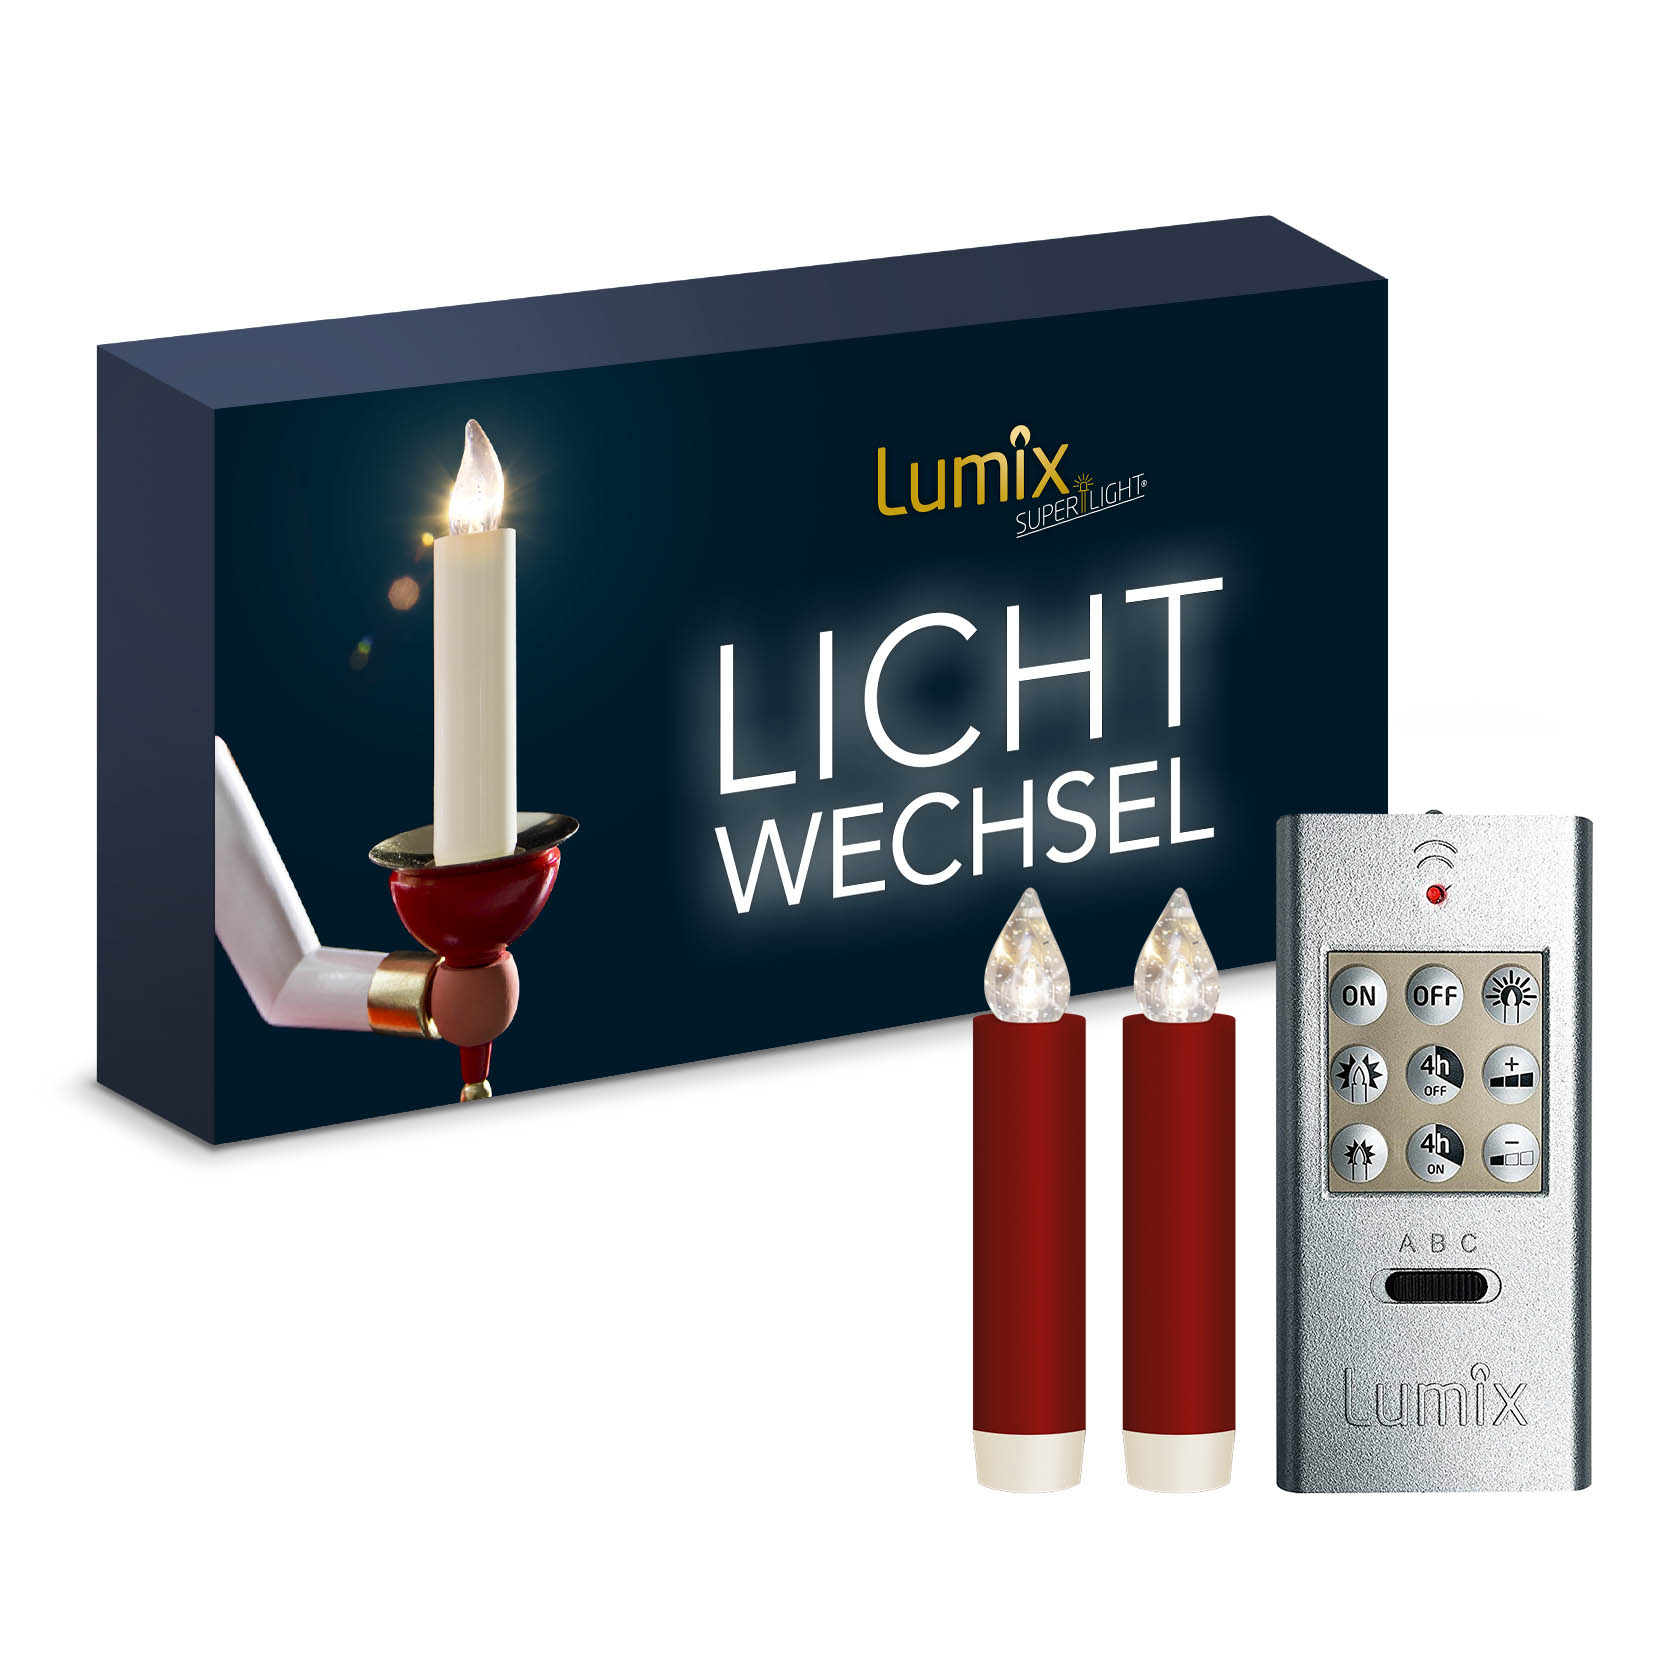 LUMIX CLASSIC MINI S -superlight- rot, Basis-Set, 2 Kerzen, 1 Fernbedienung, 2 Batterien im Dregeno Online Shop günstig kaufen